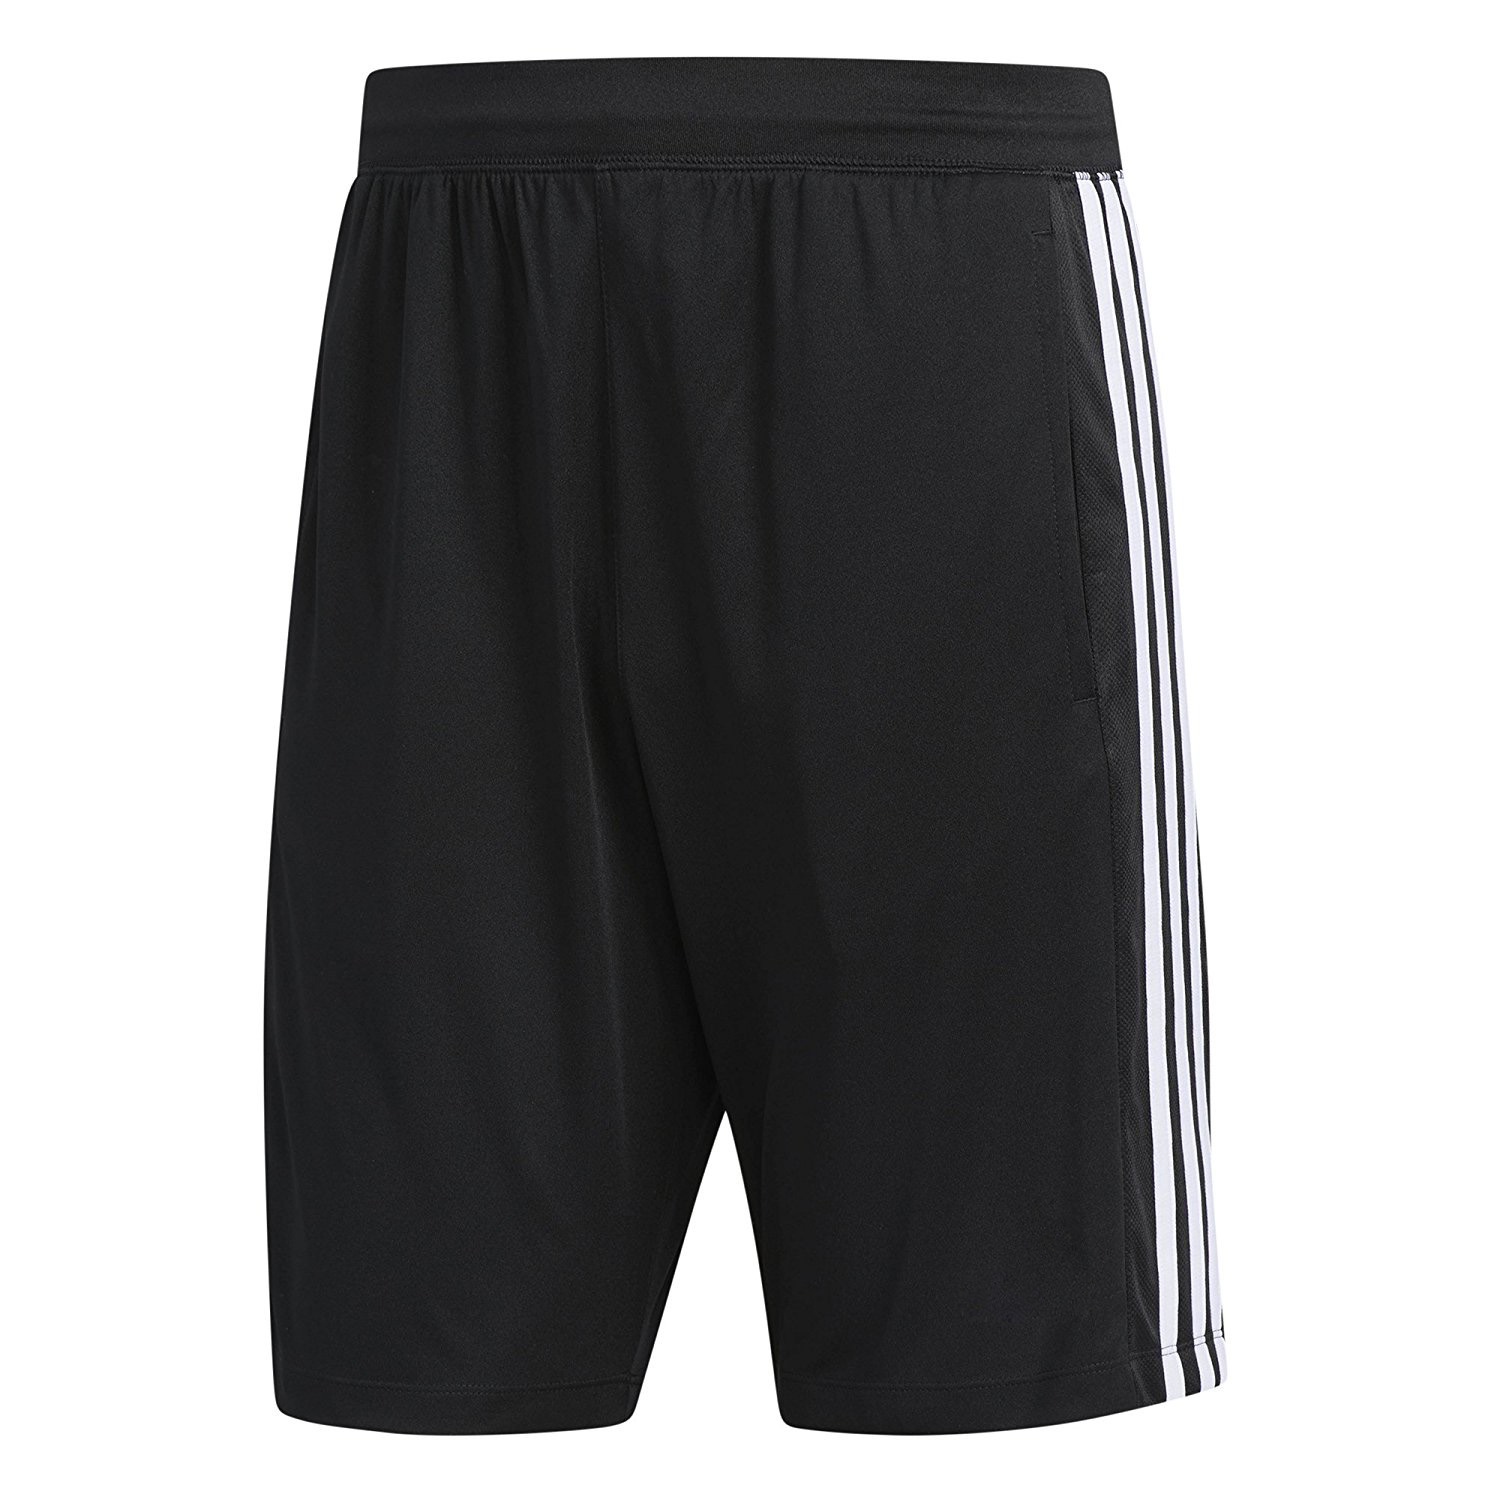 Buy Uniq Sports Shorts for Boys Black white Online @ ₹249 from ShopClues